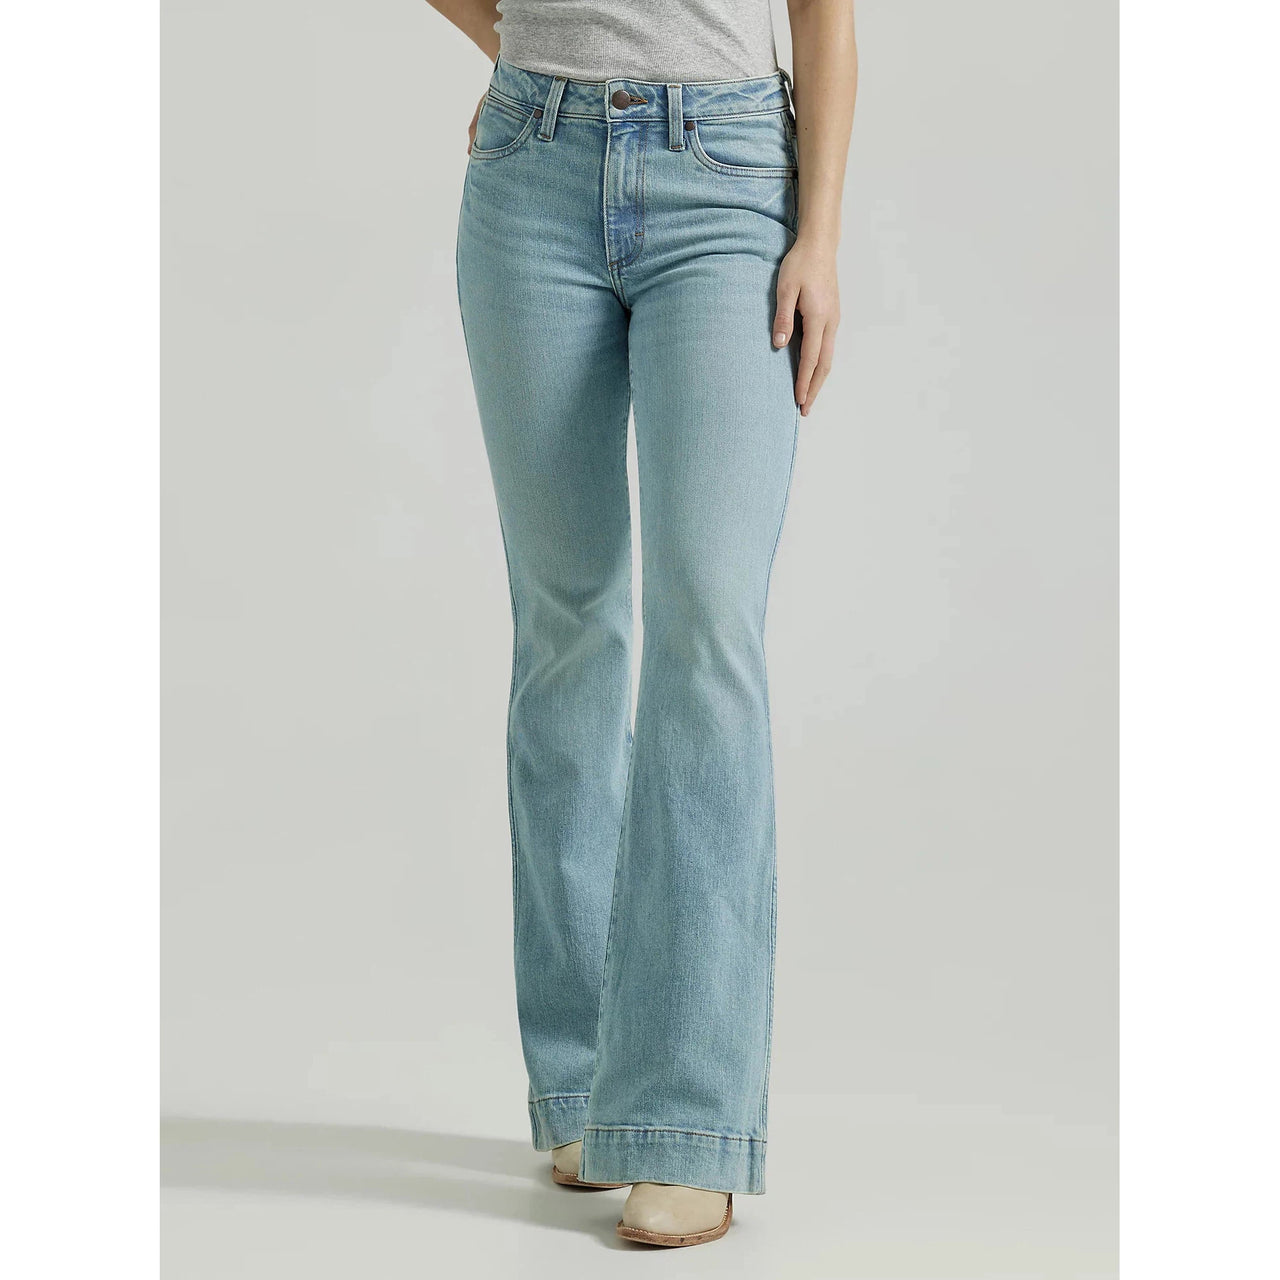 Wrangler Women's Retro Bailey Mid Rise Trouser Jeans - Flore